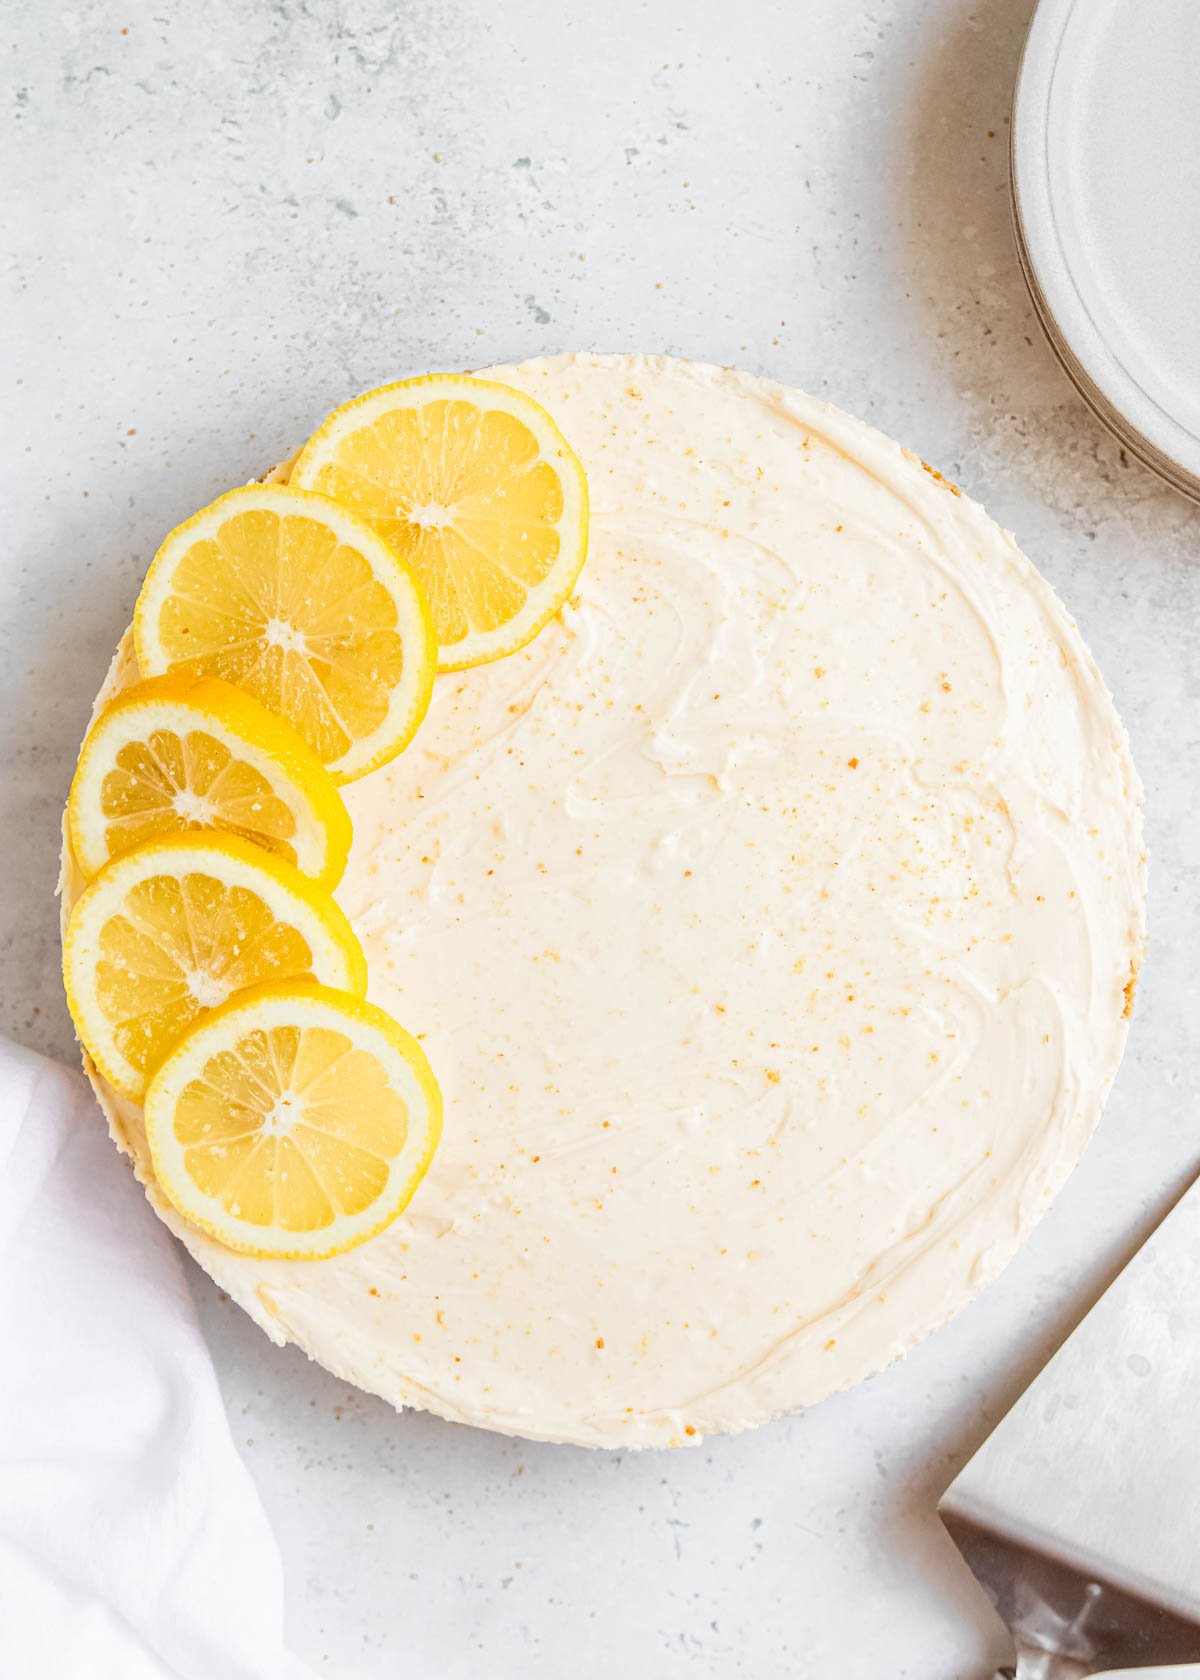 decorate no bake lemon cheesecake simply with sliced lemons on the edge